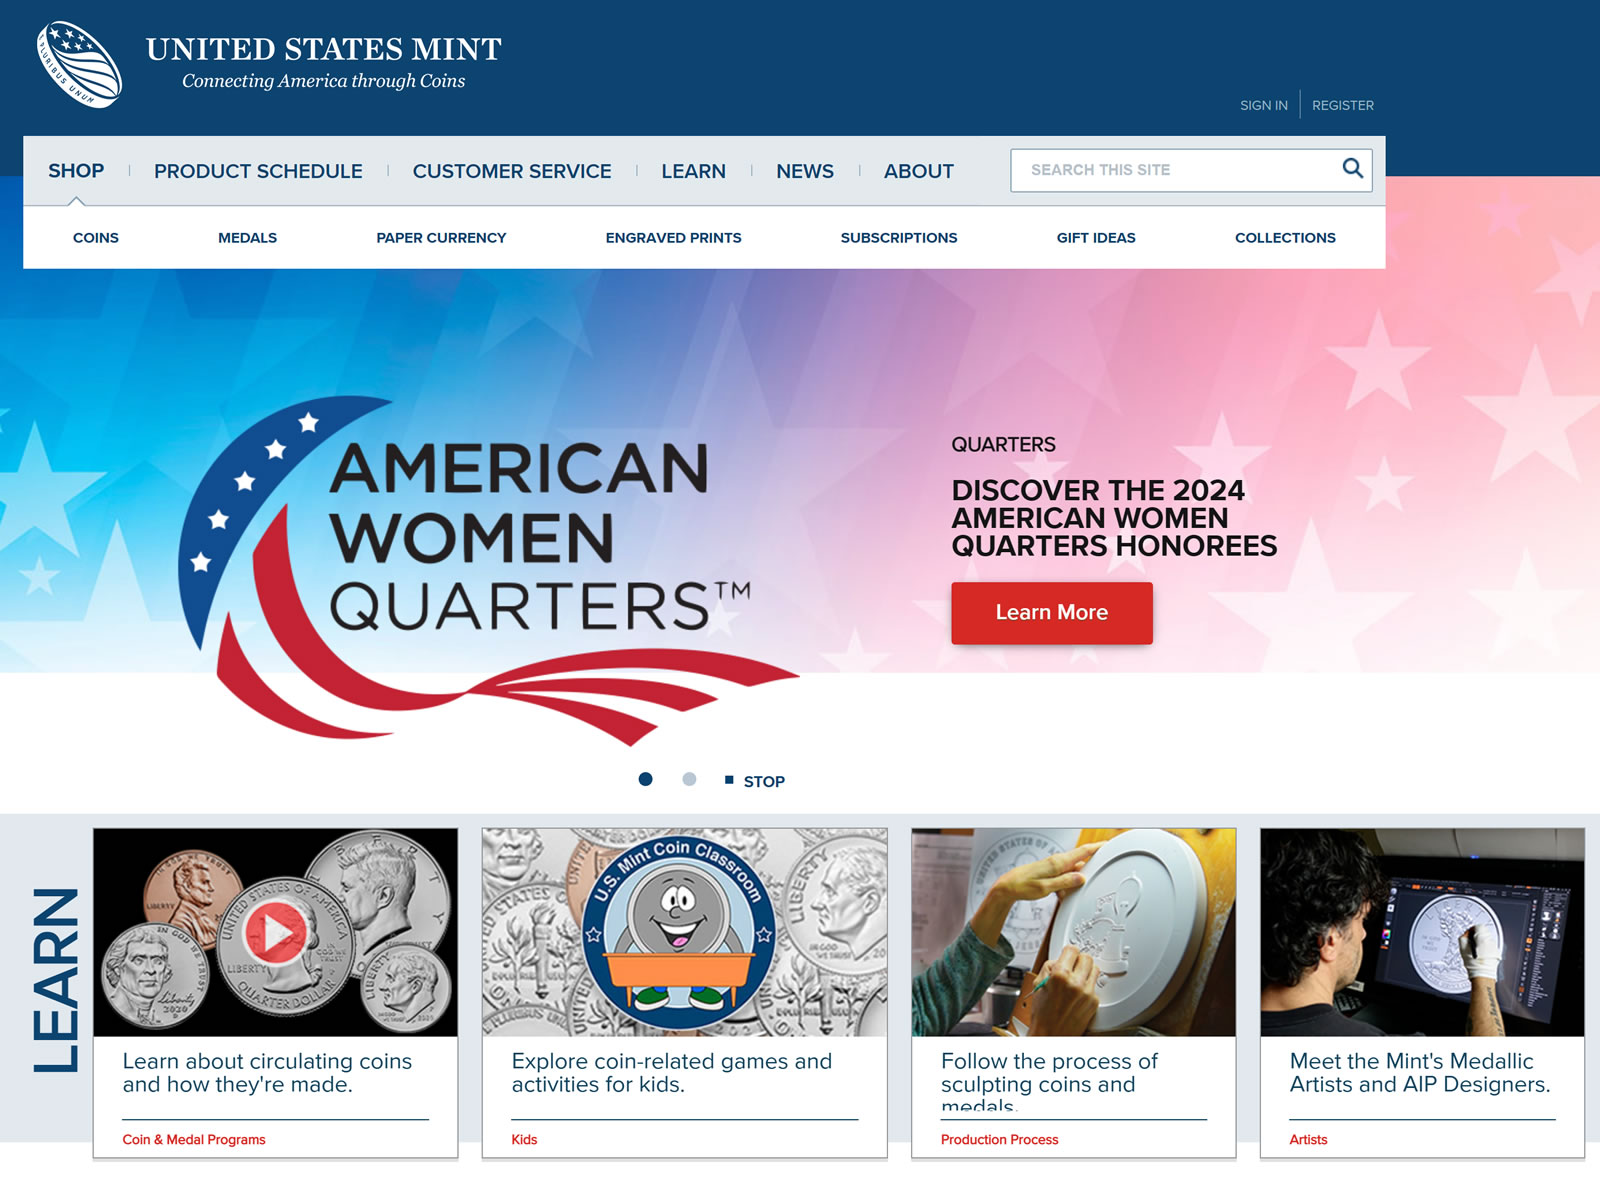 U.S. Mint Announces Honorees for 2024 Quarters CoinNews